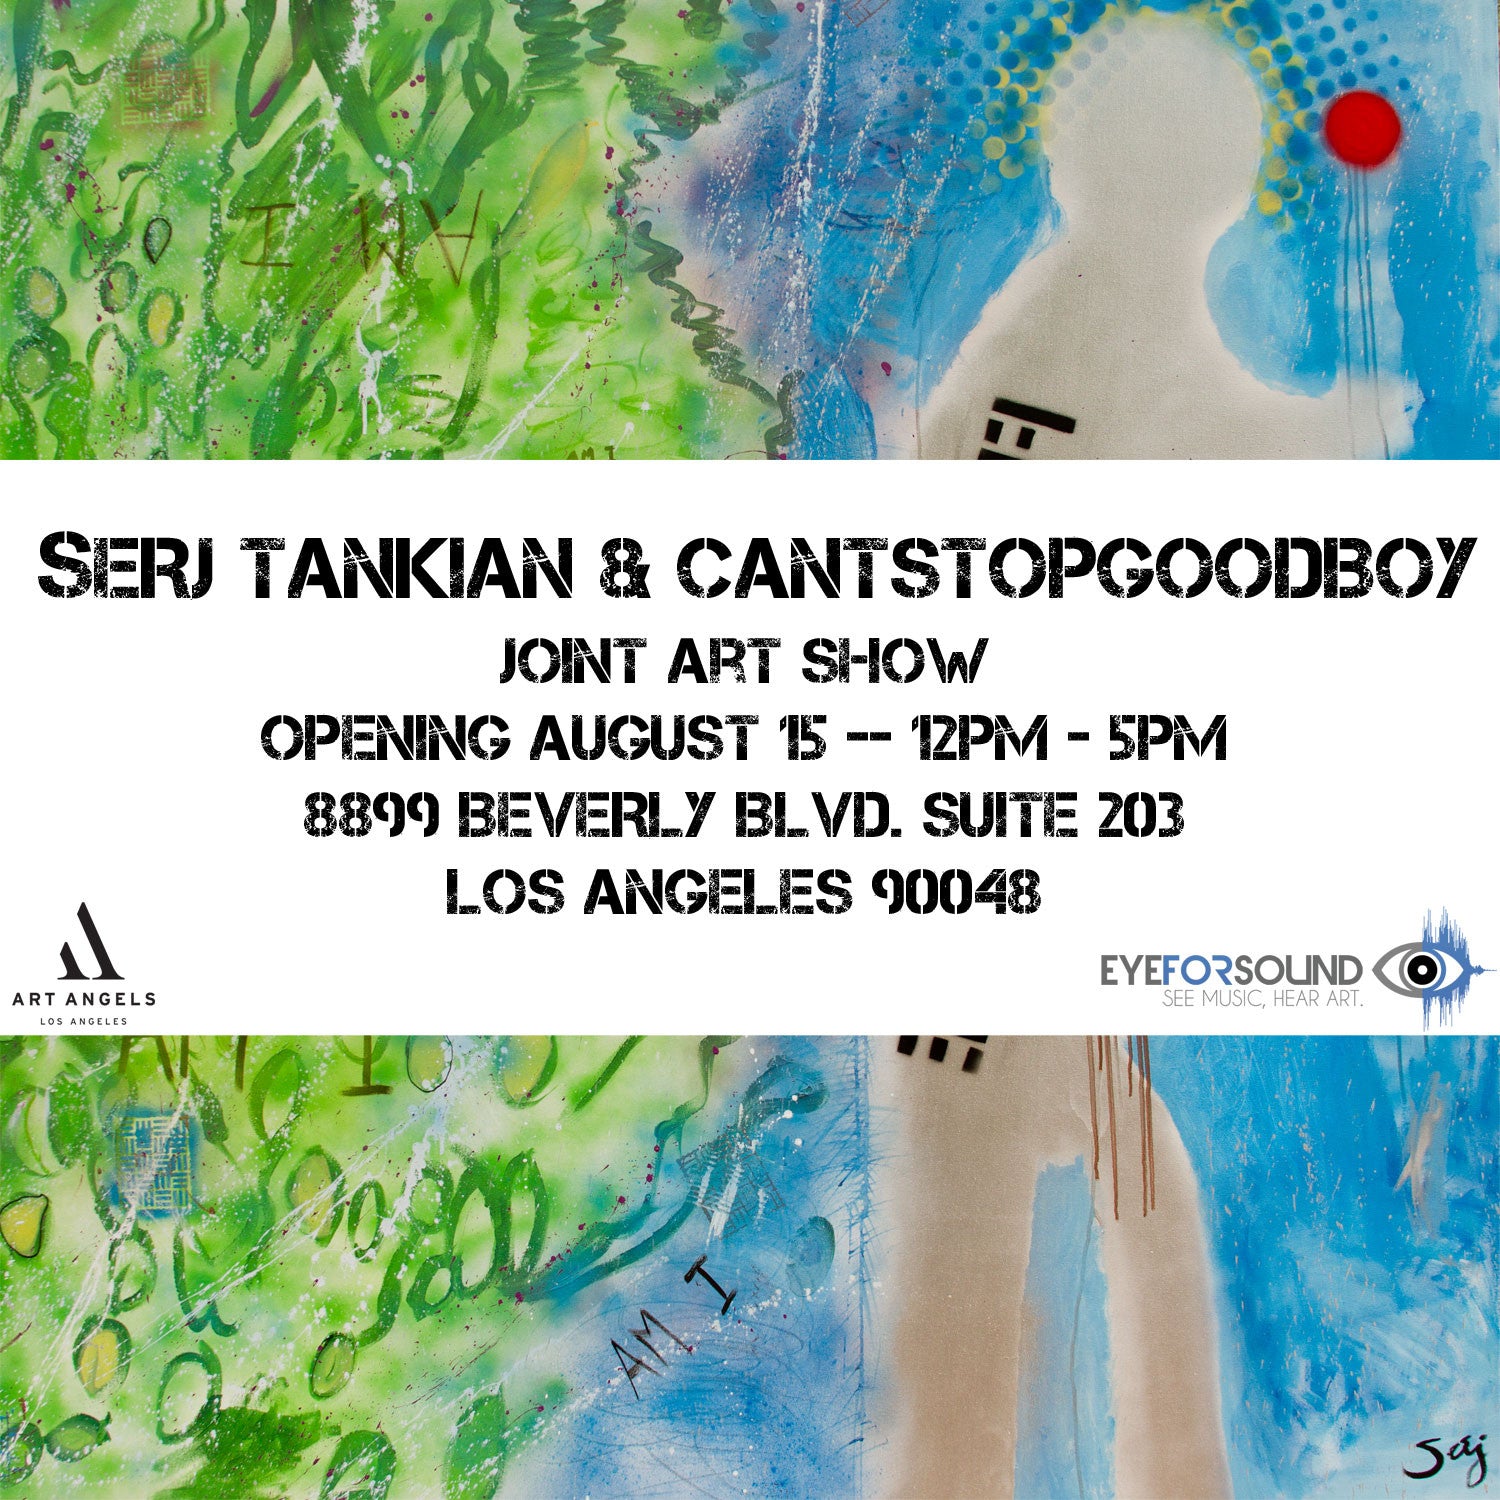 Serj Tankian and CANTSTOPGOODBOY Announce "Marbelized Words" Art Exhibit